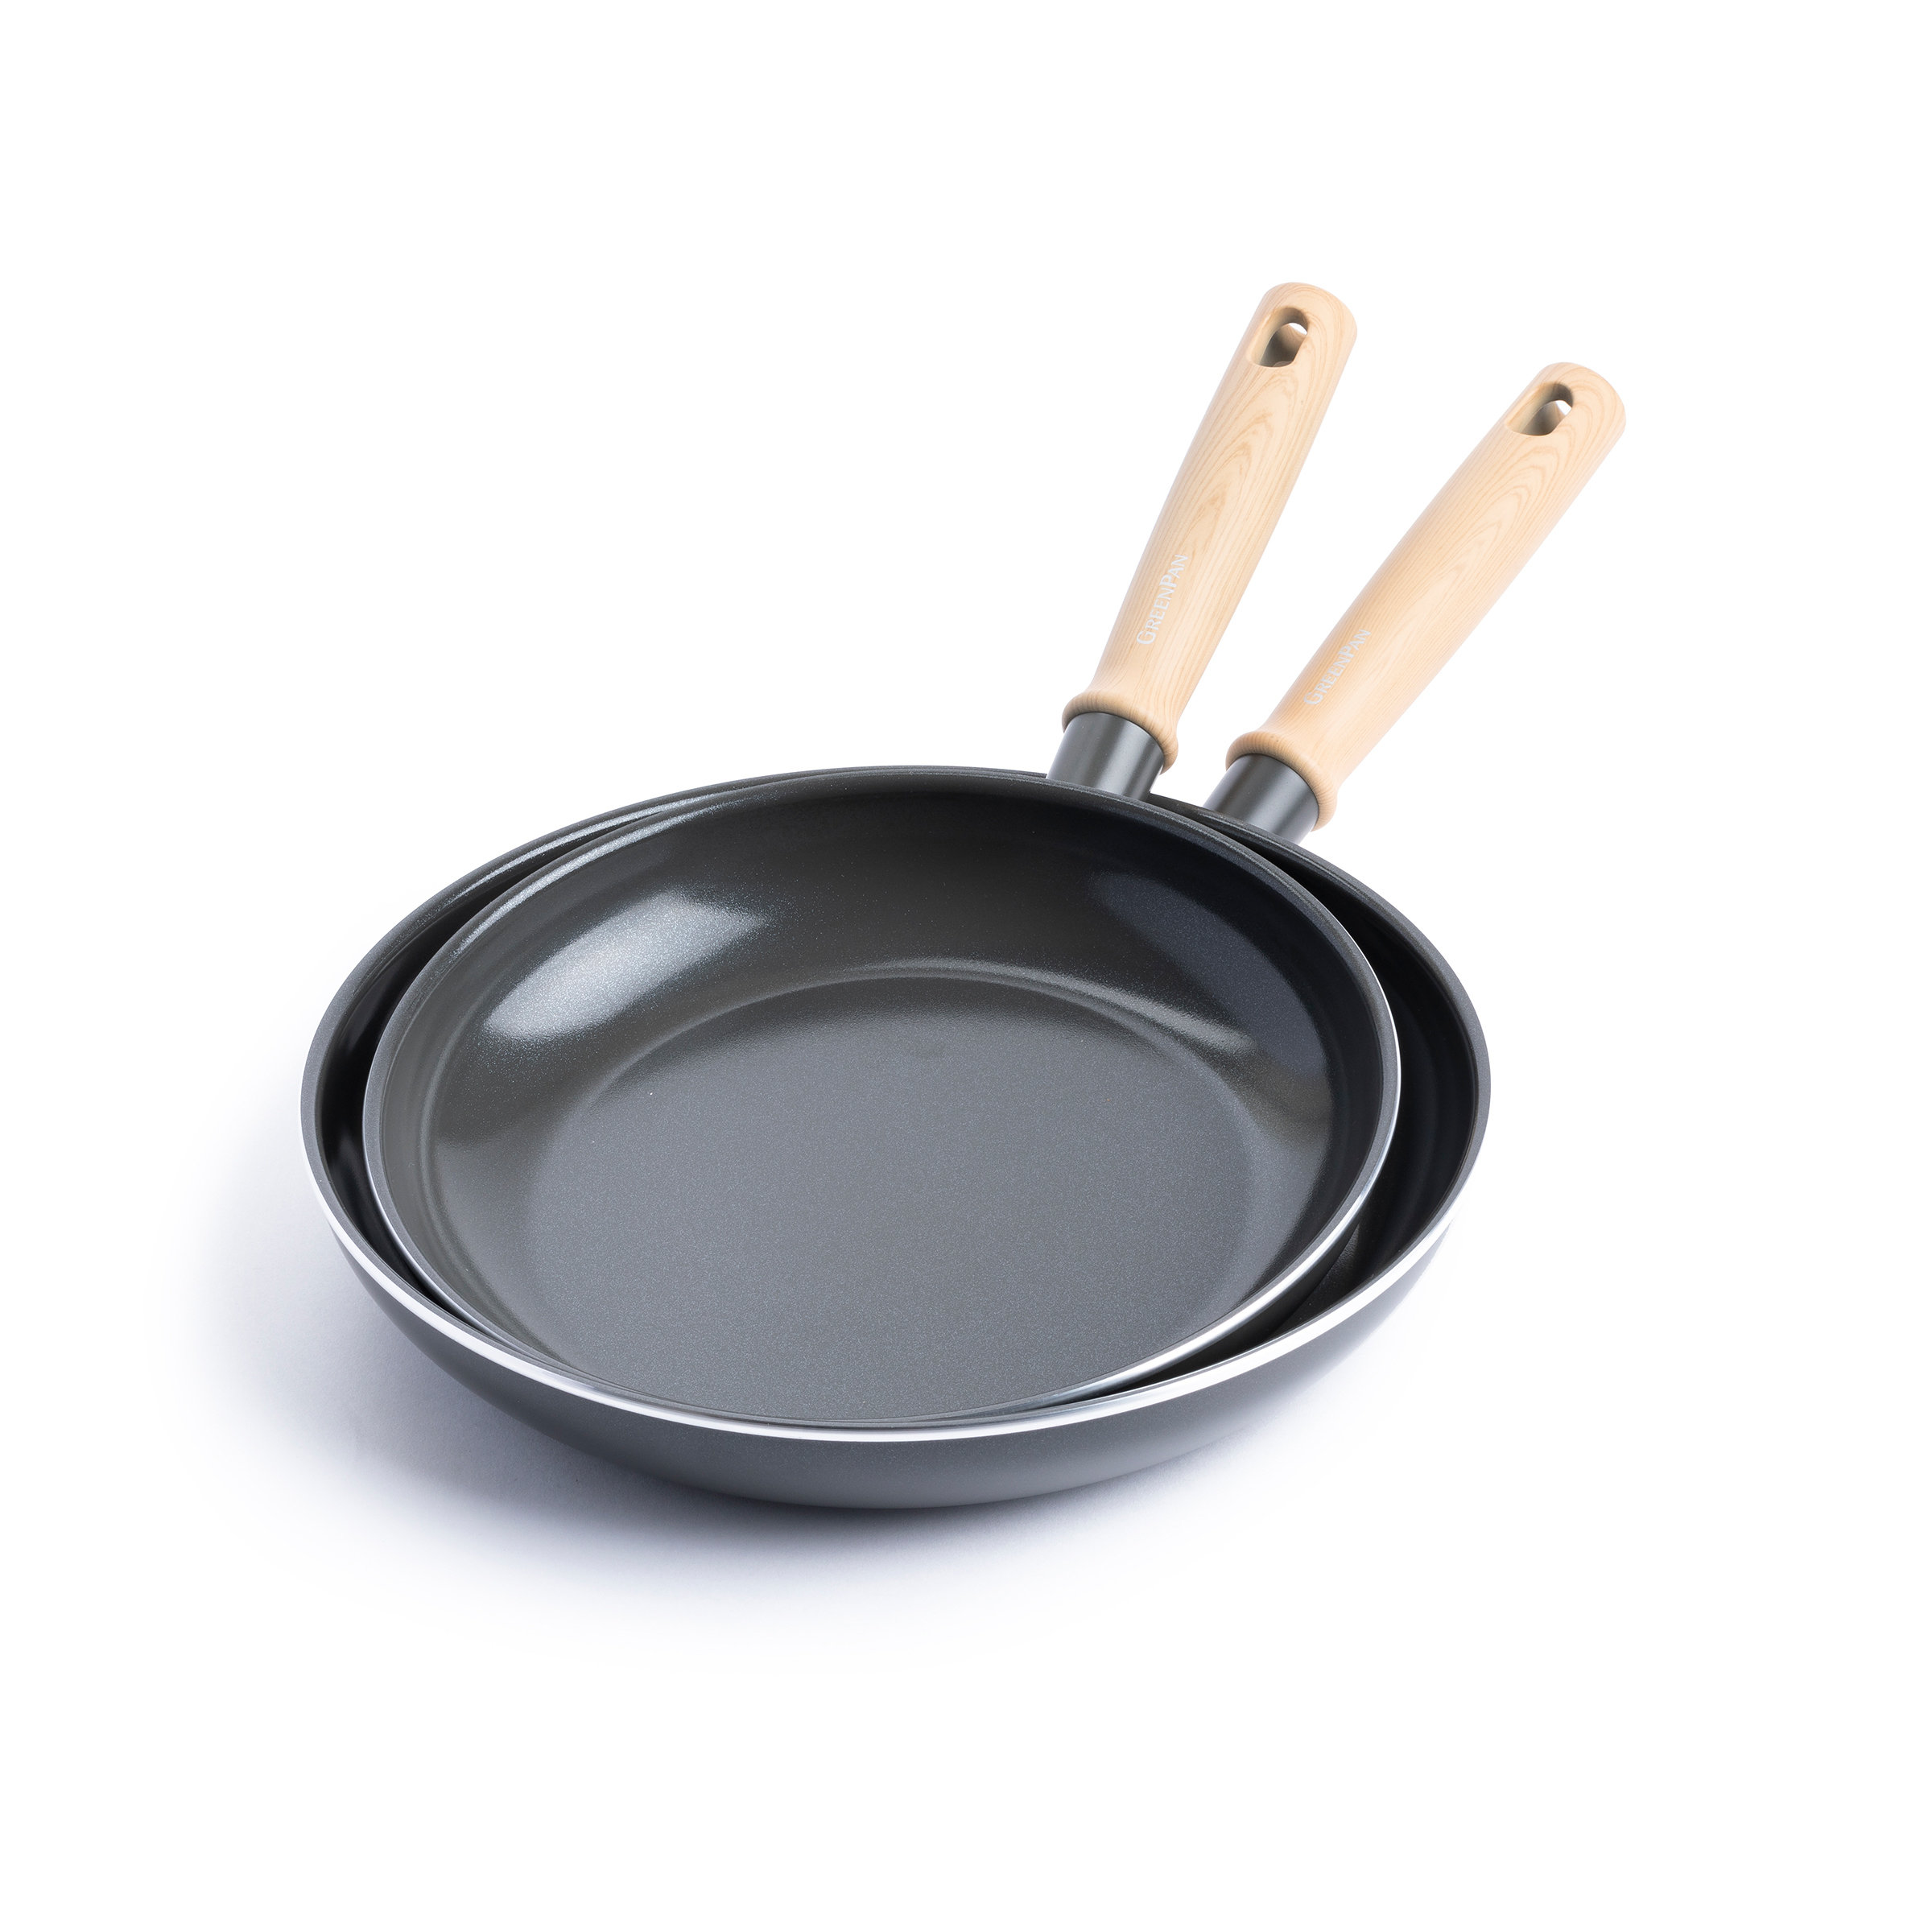 GreenPan Hudson Healthy Ceramic Nonstick, 3 Quart Saute Pan with Lid, Black  